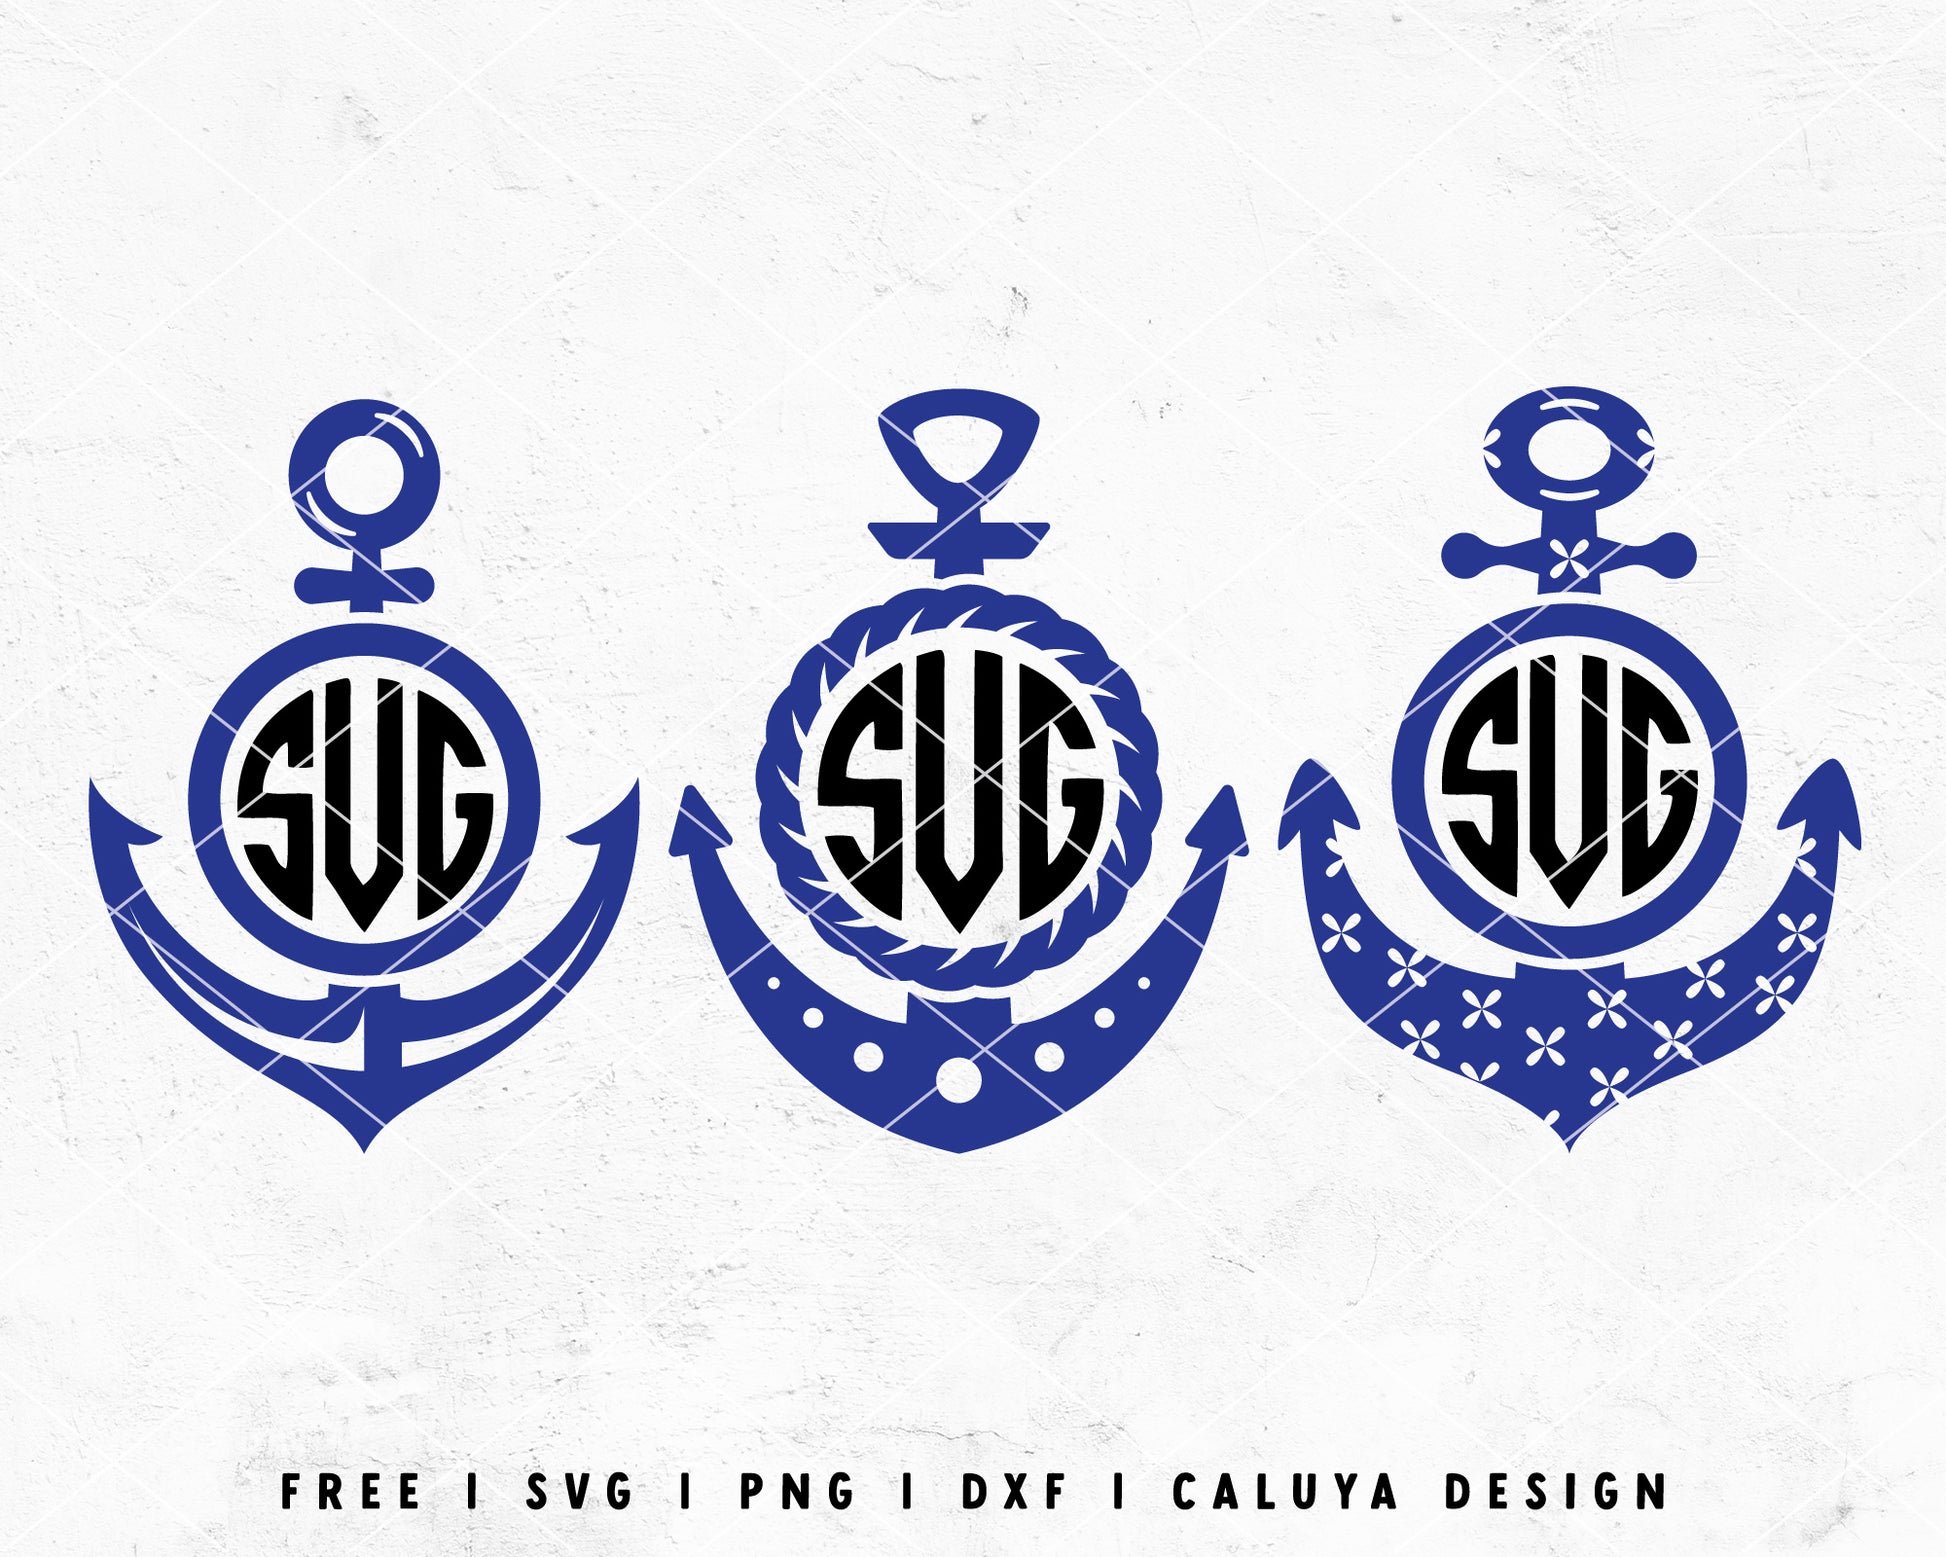 FREE Anchor SVG | Monogram SVG  Cut File for Cricut, Cameo Silhouette | Free SVG Cut File